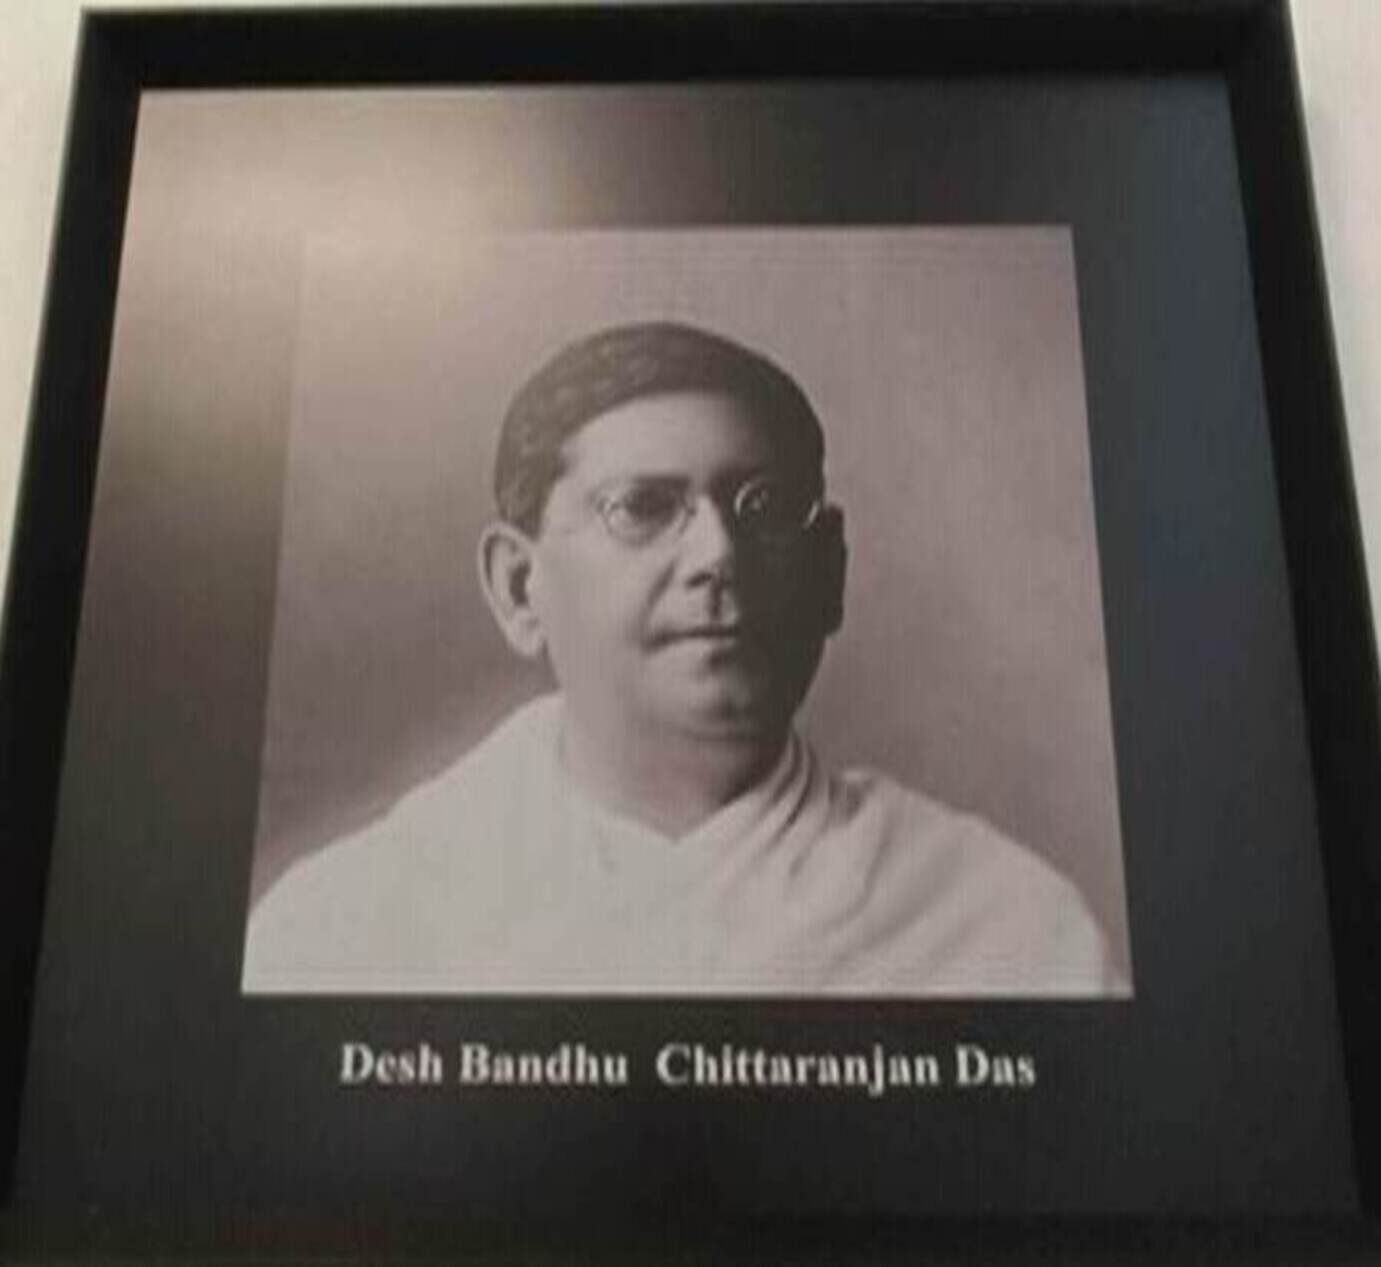 Deshabandhu Chittaranjan Das